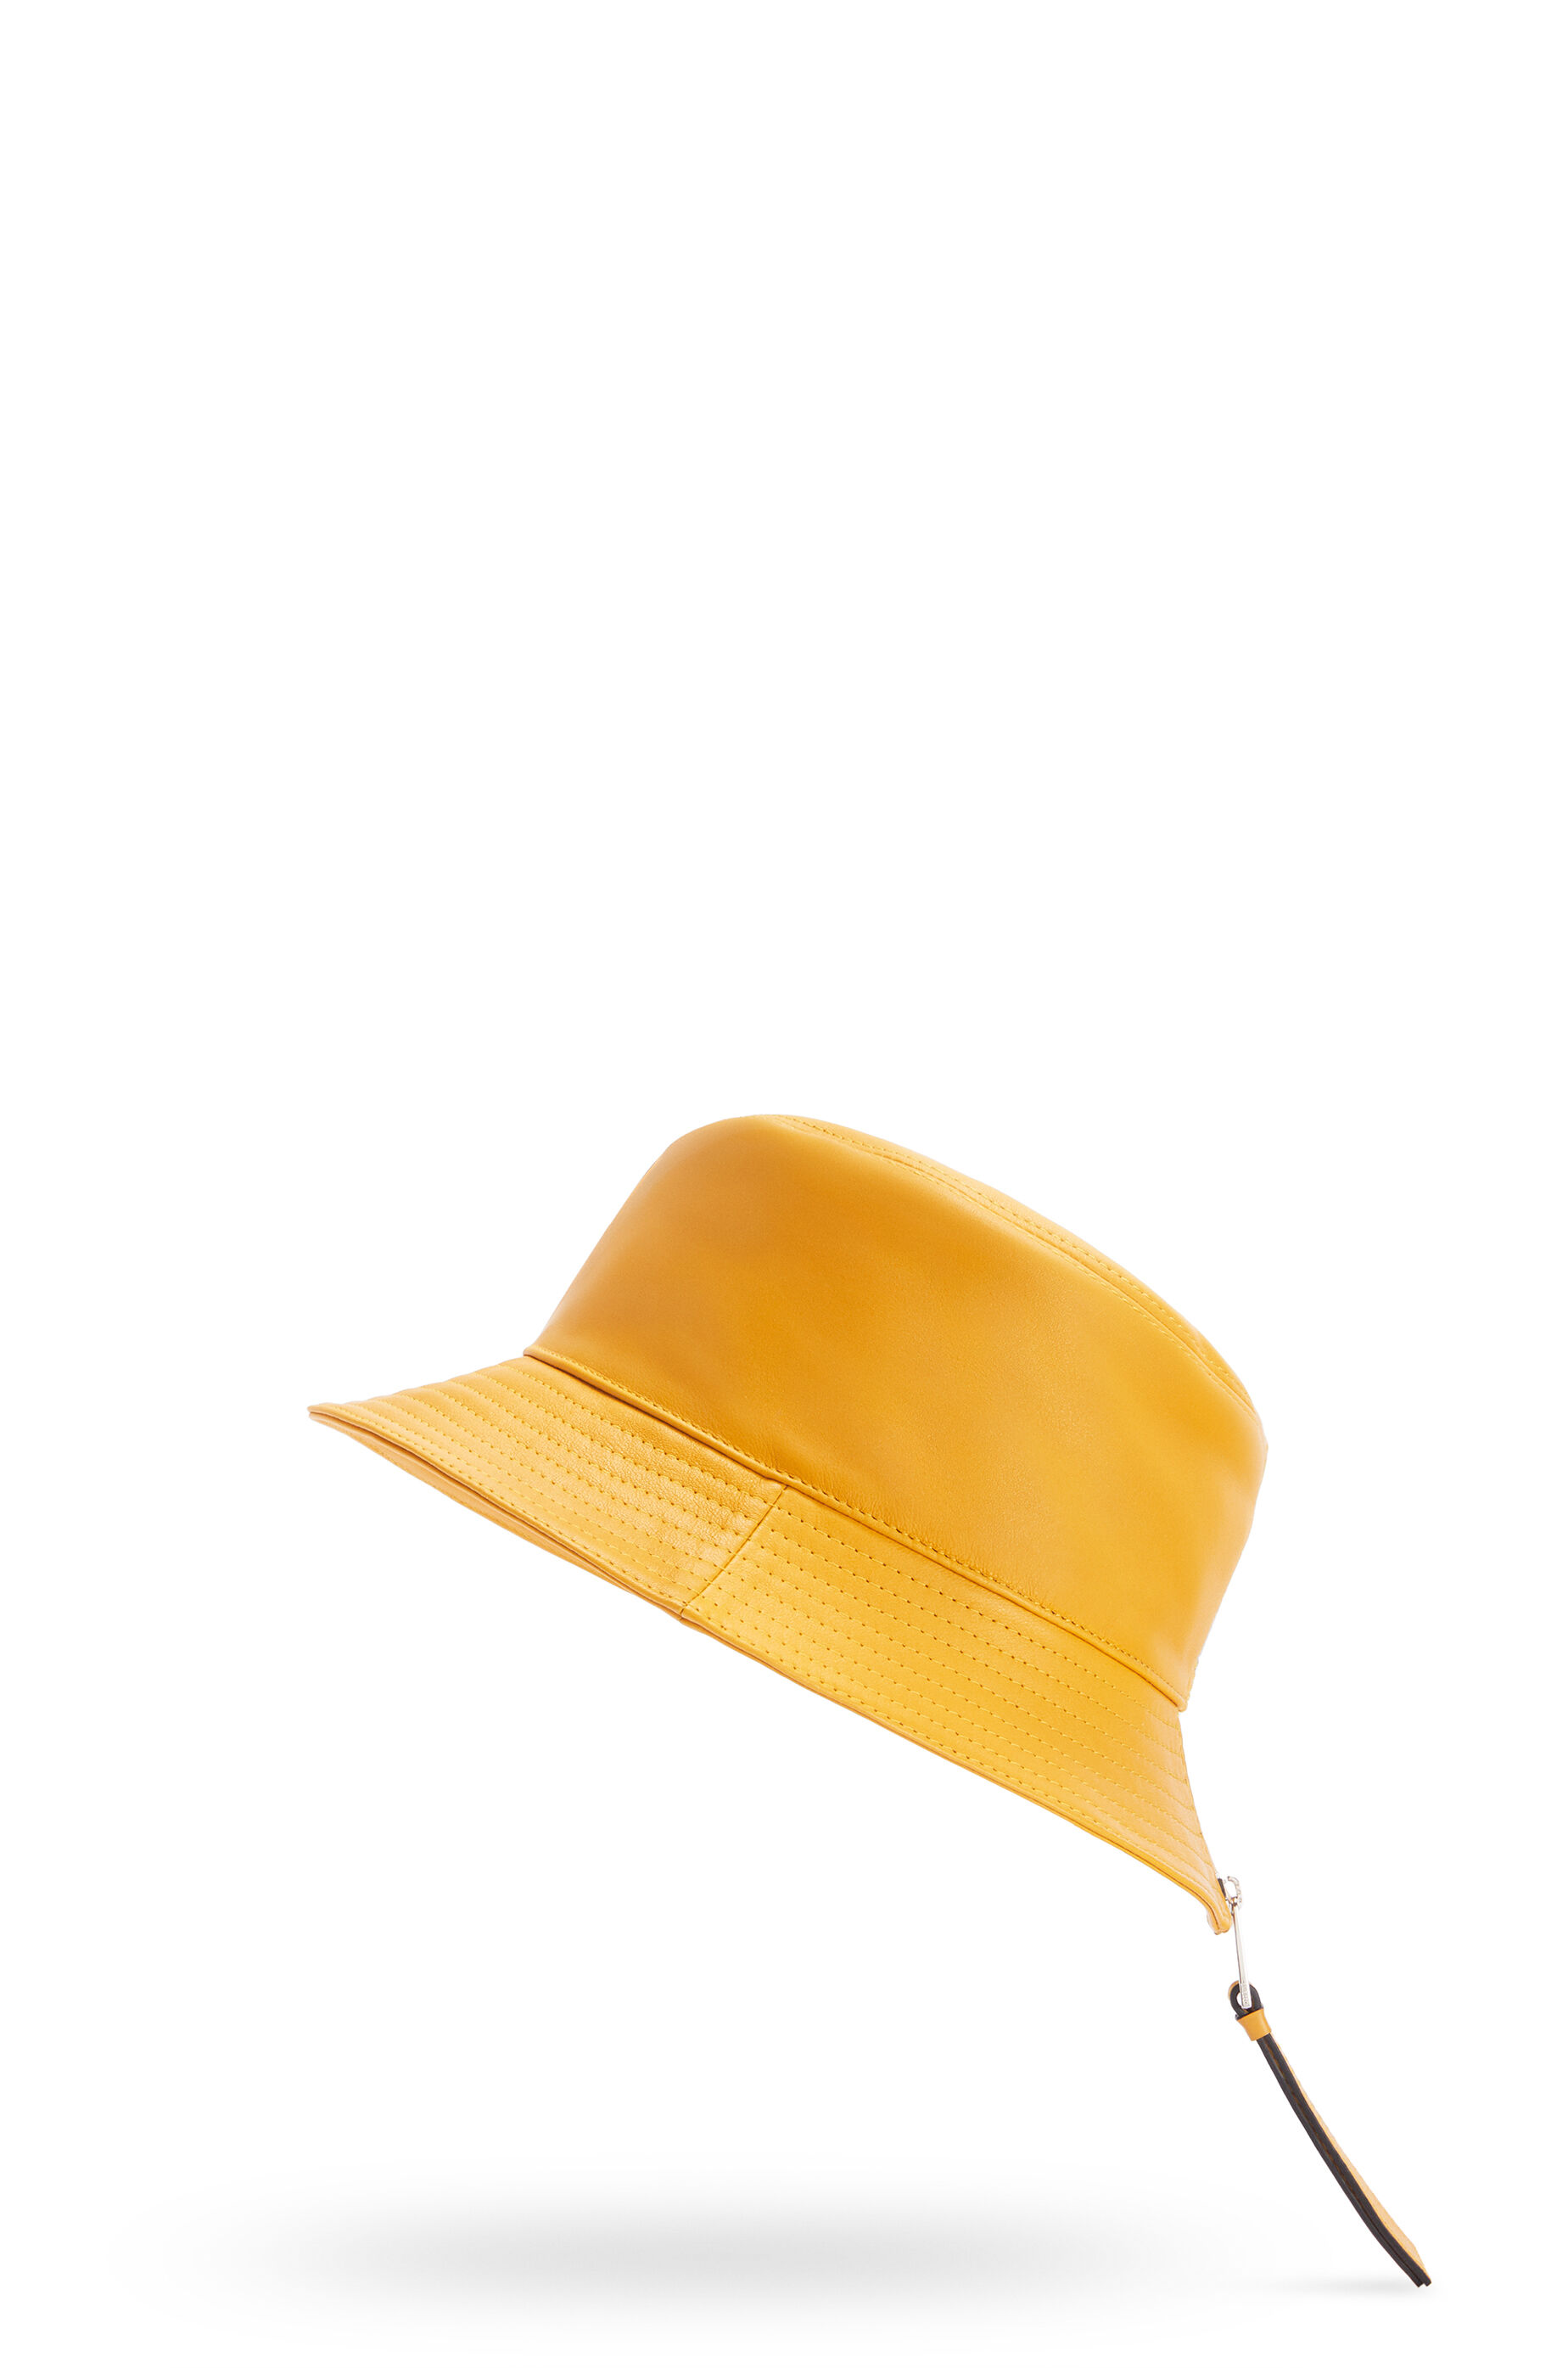 yellow jordan hat